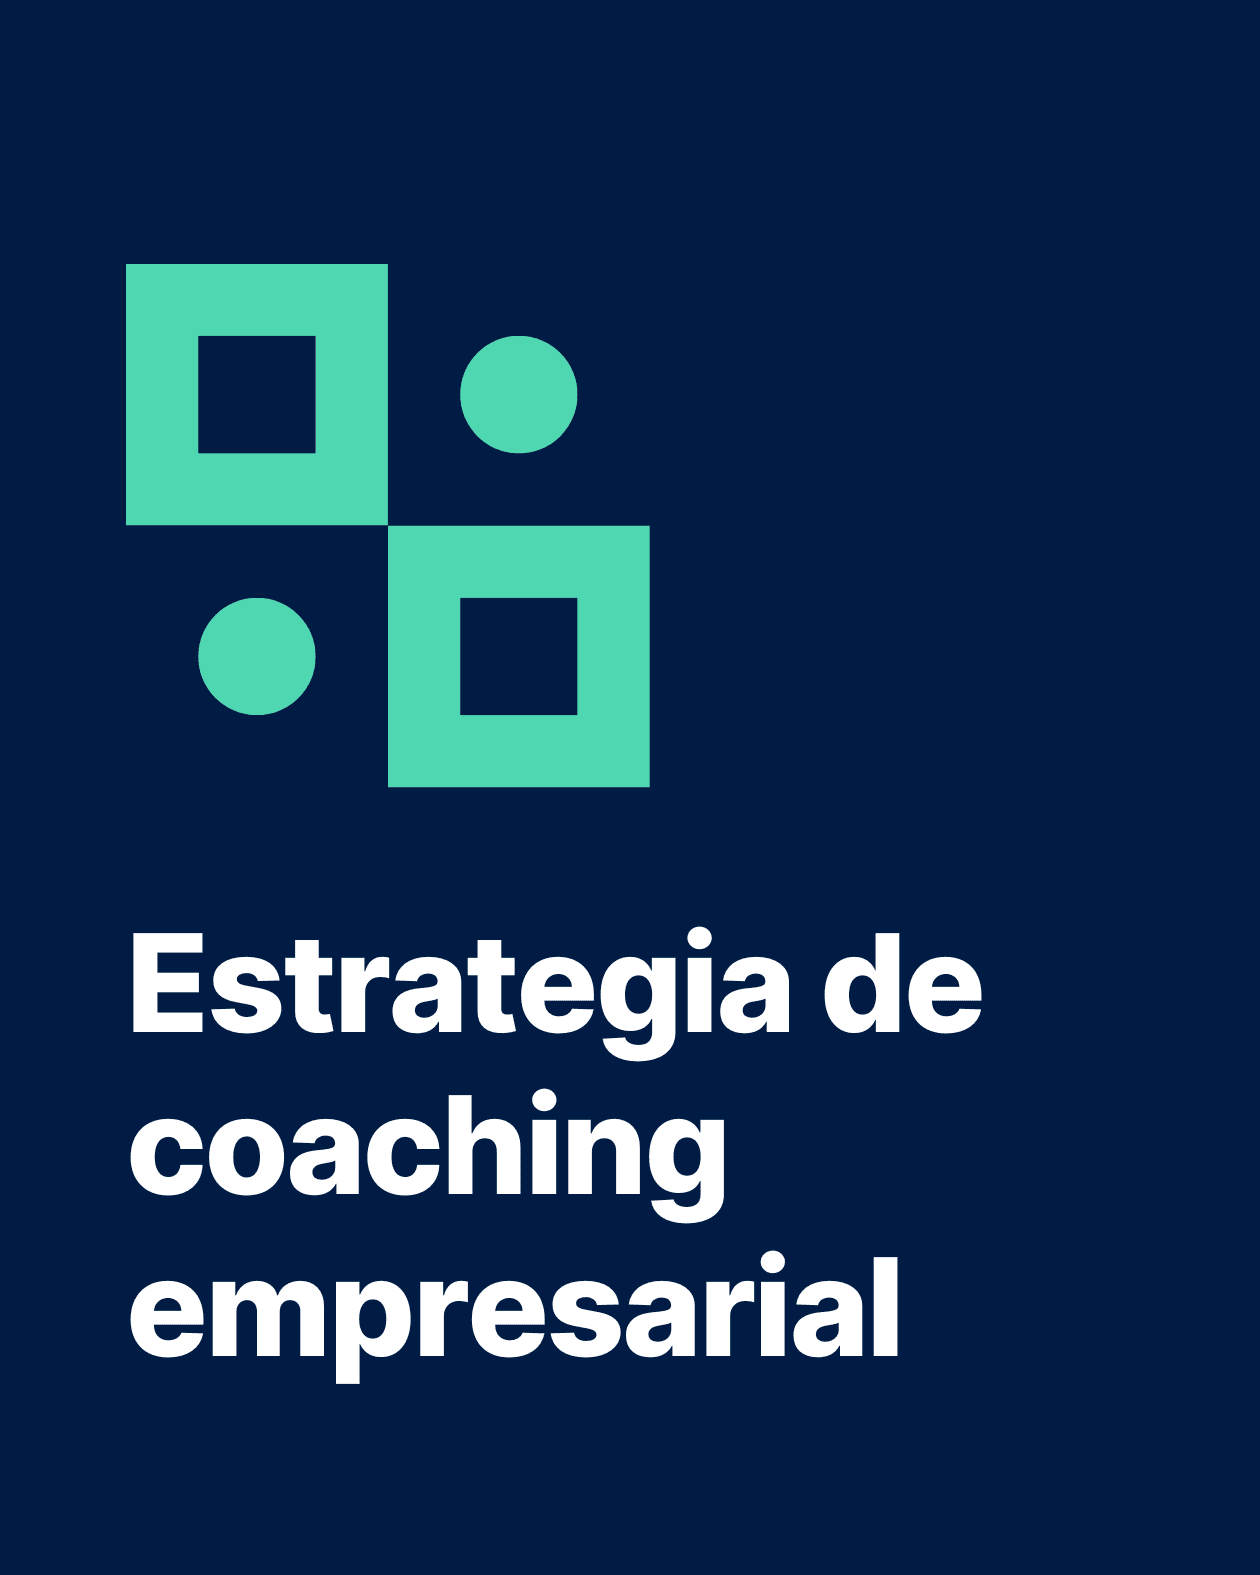 Portada de blog sobre coaching empresarial